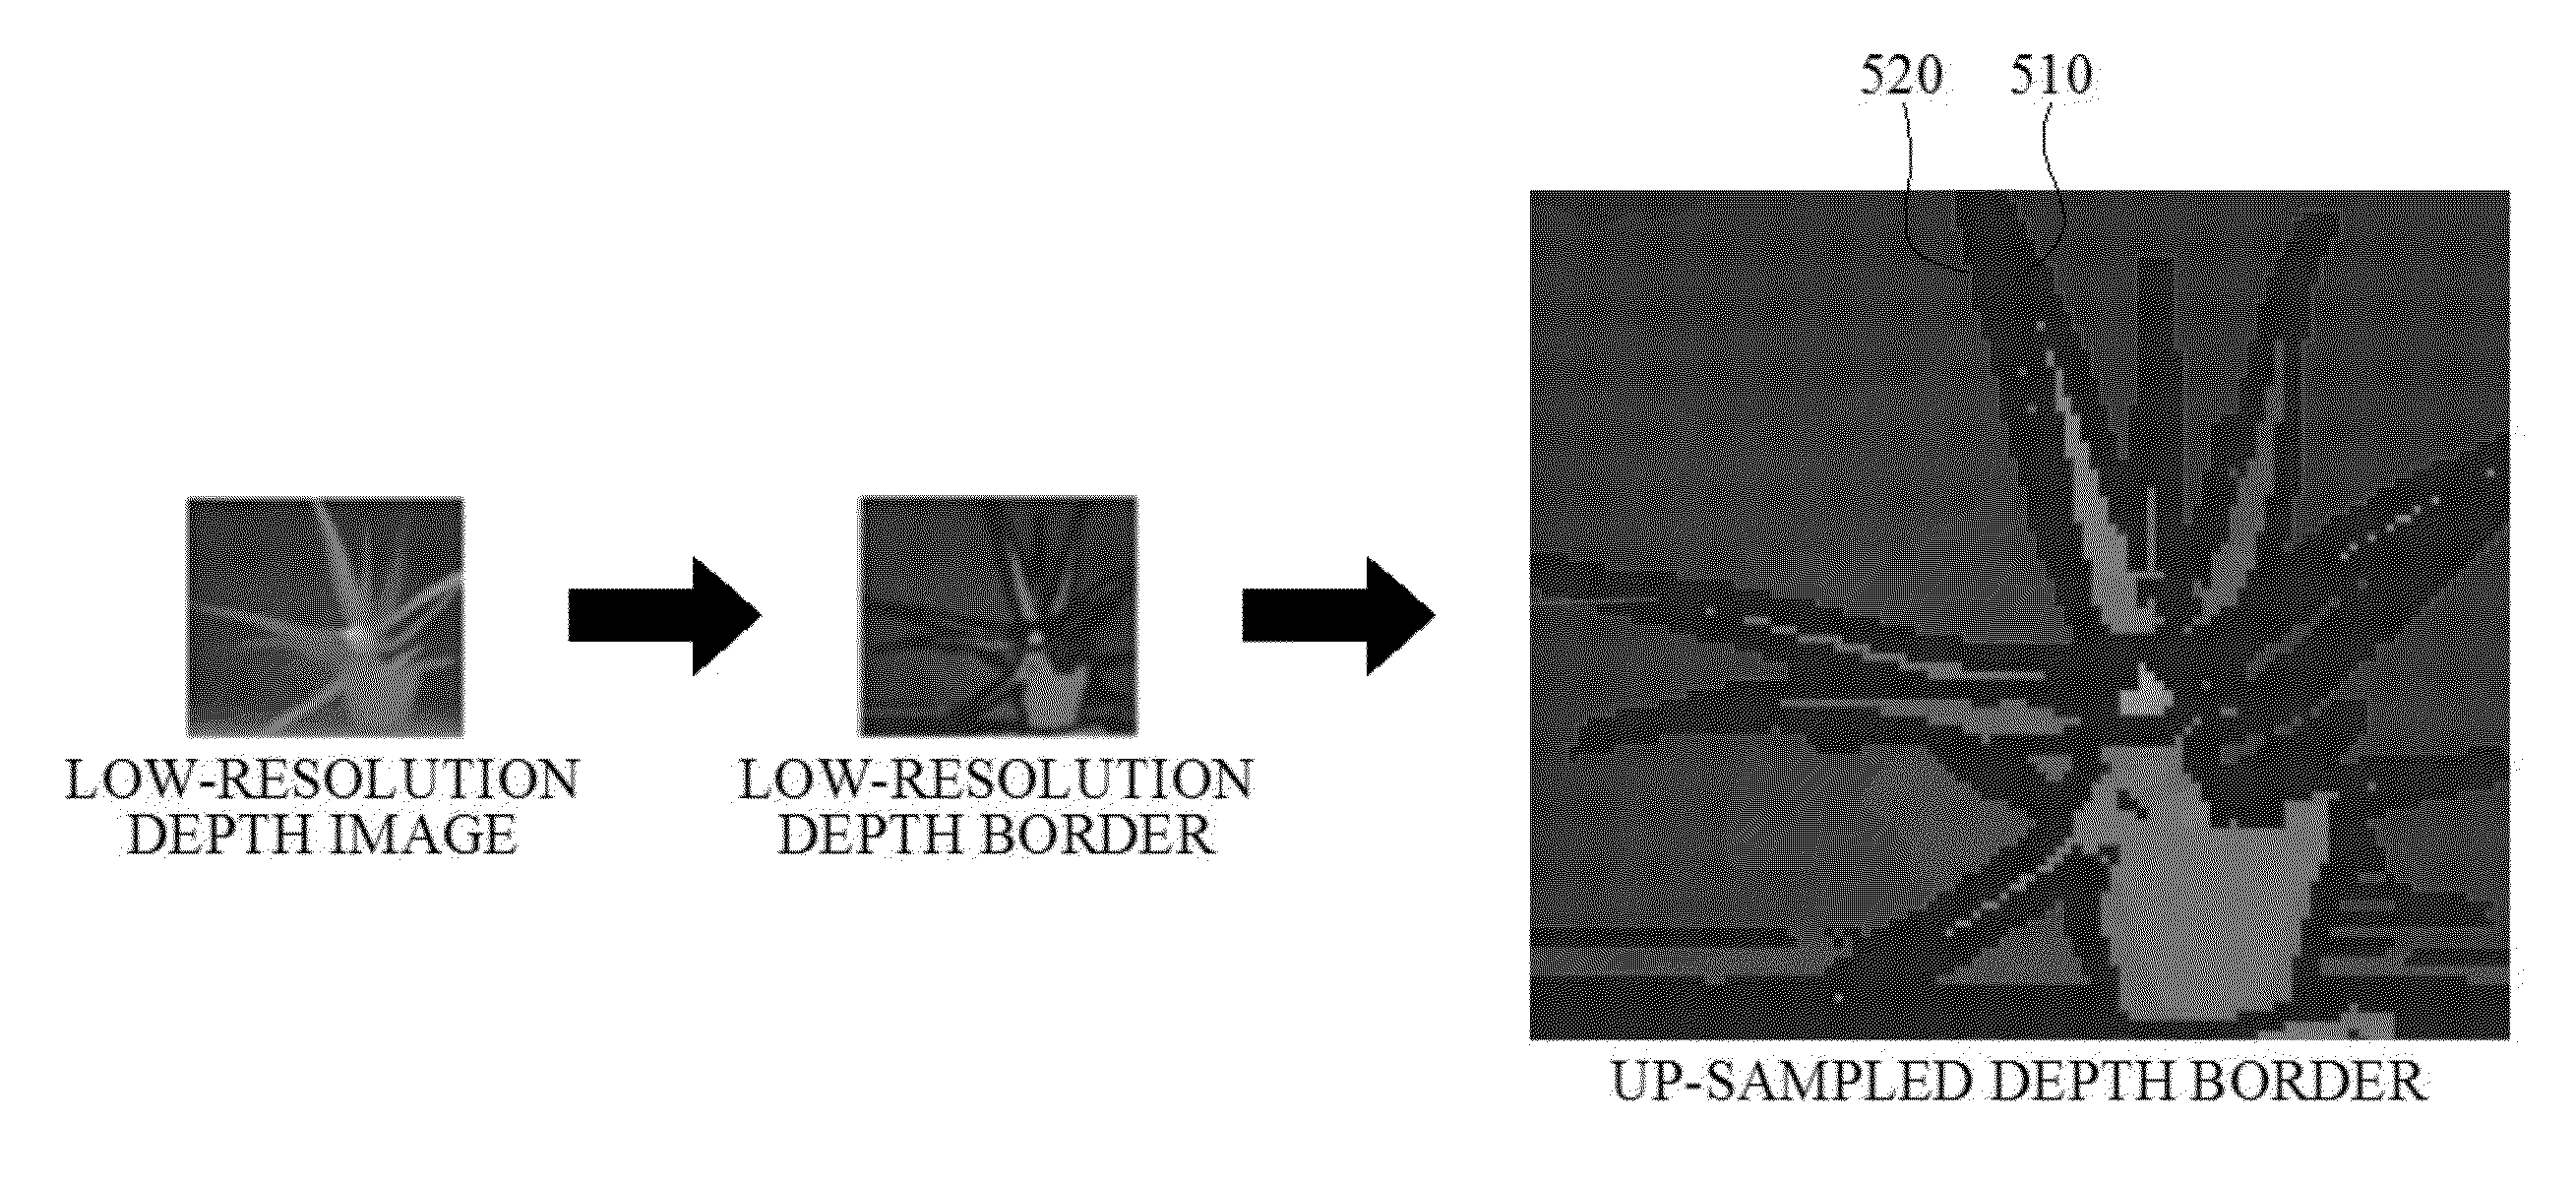 Depth image conversion apparatus and method